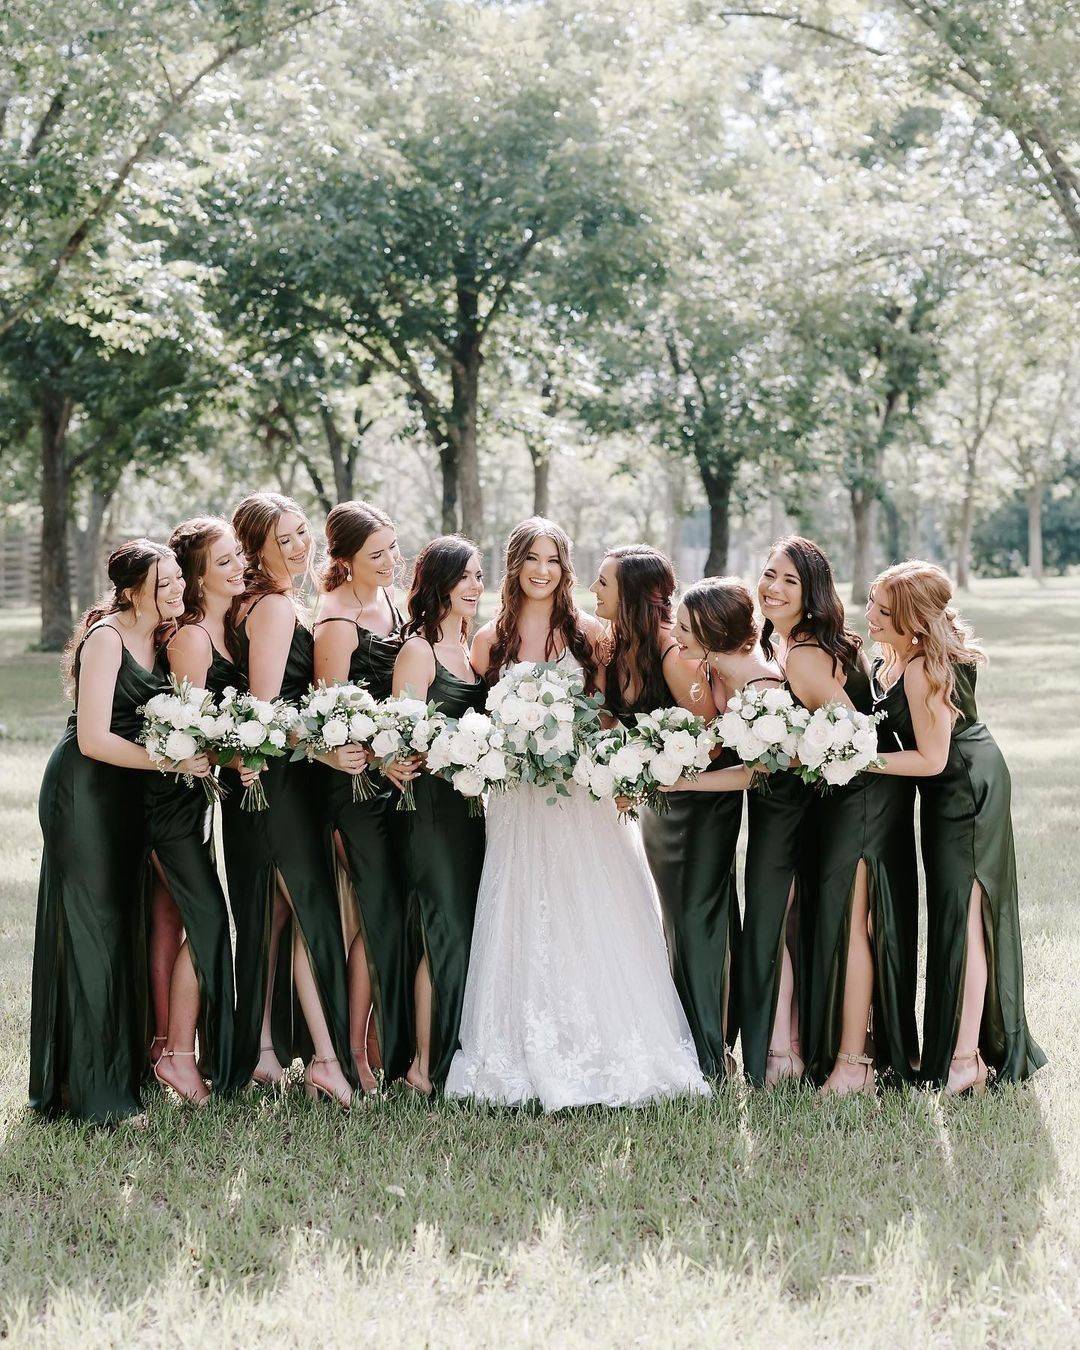 emerald green satin bridesmaid dresses